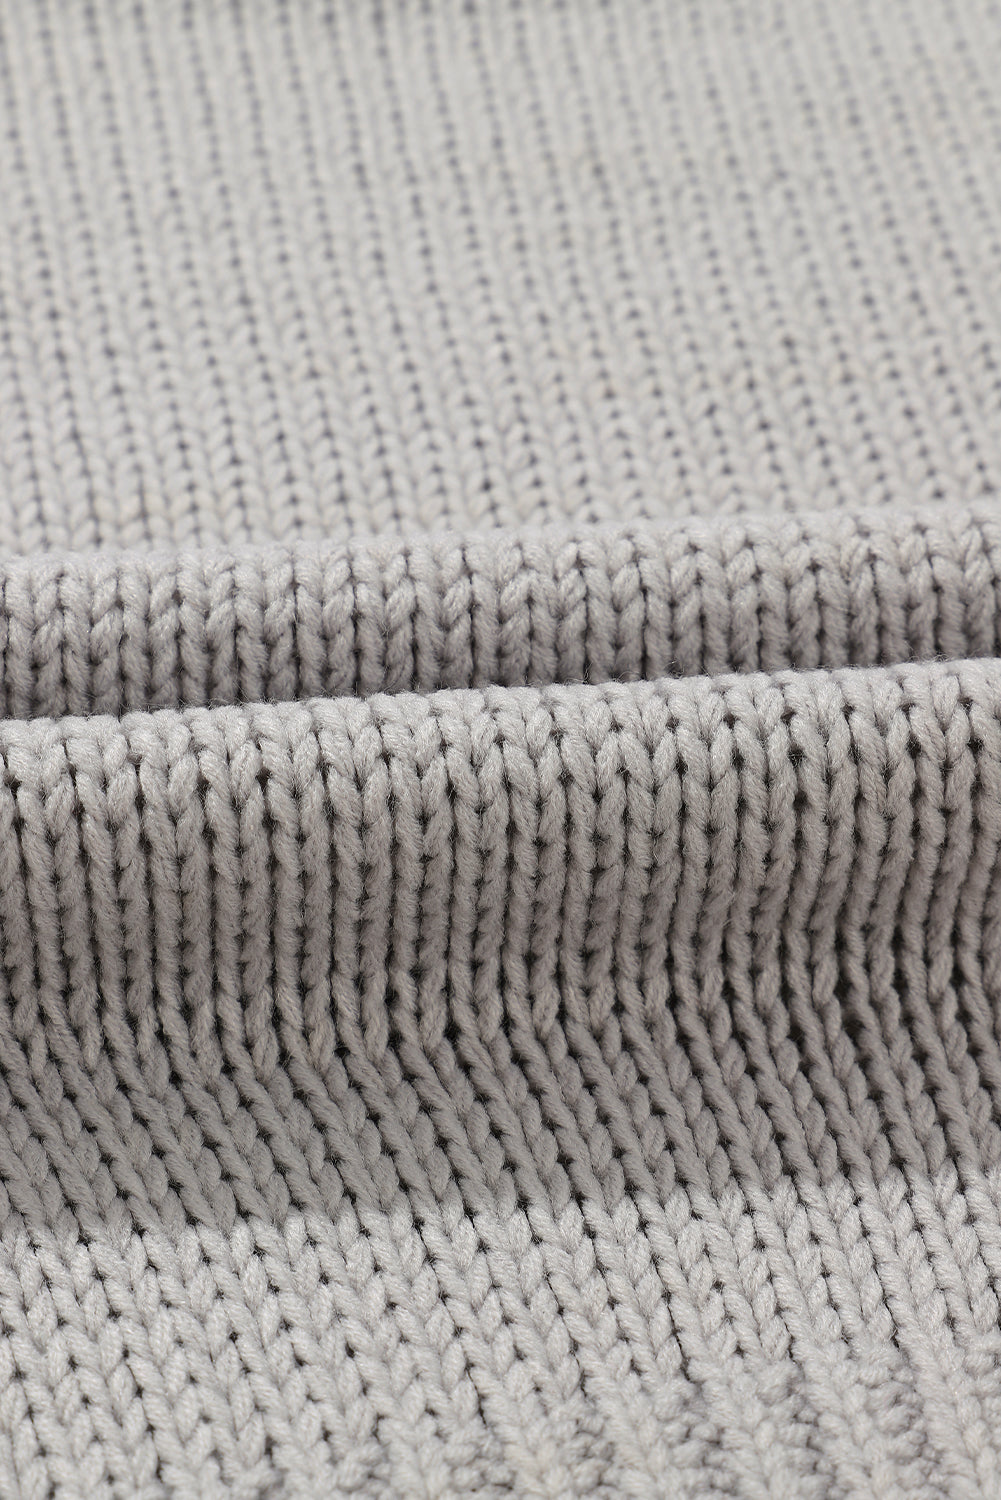 Svetlo siv debel pleten pulover z želvastim ovratnikom na ramena